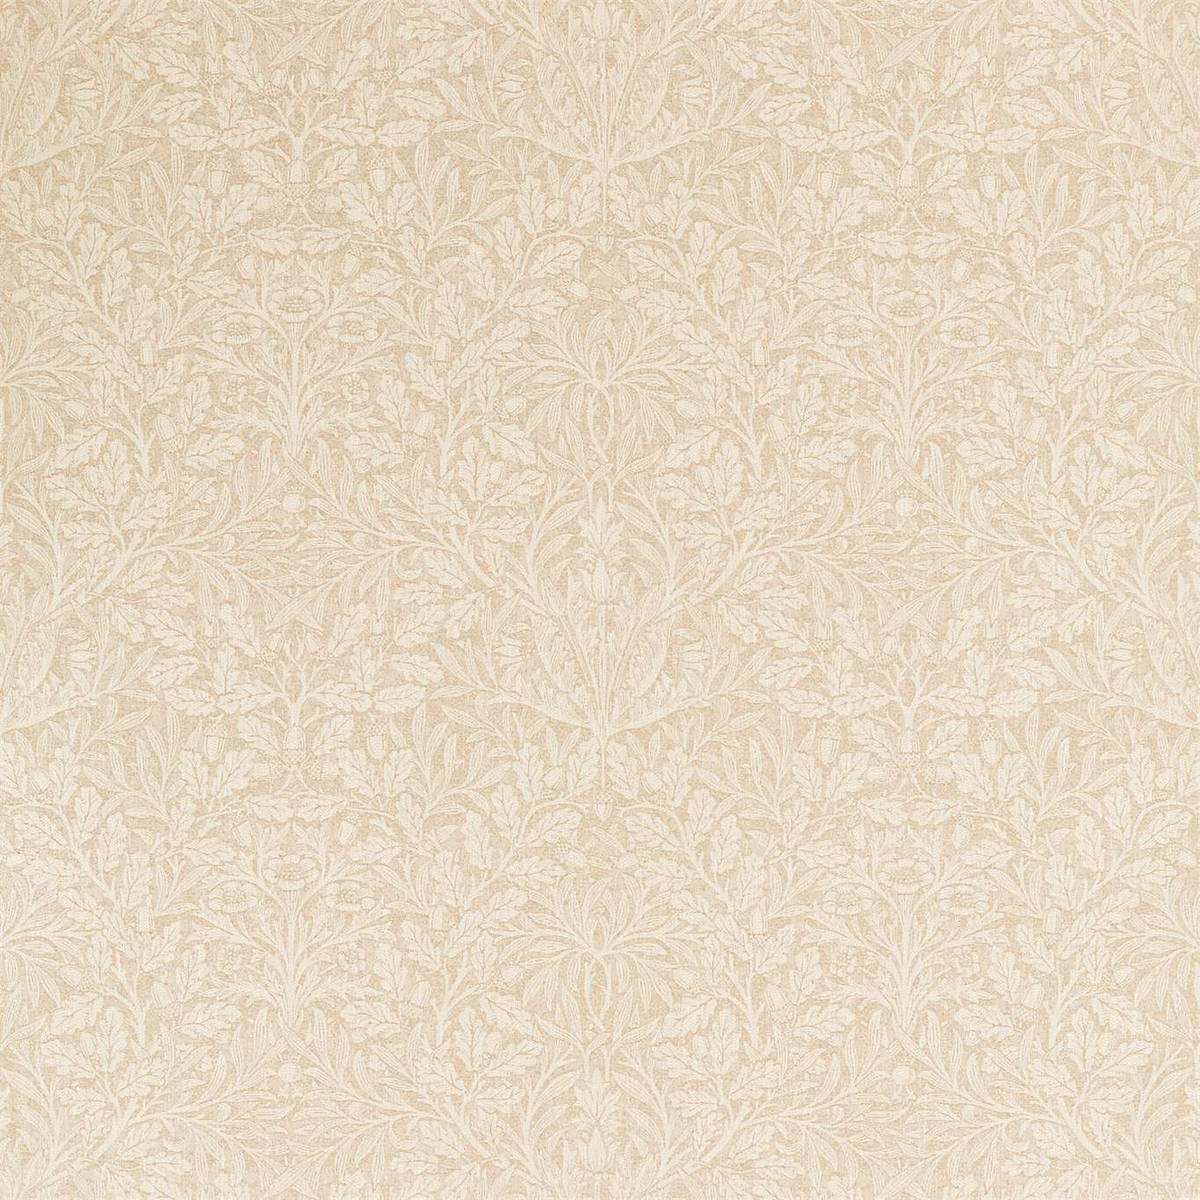 Morris Acorn Bayleaf Fabric by William Morris & Co.